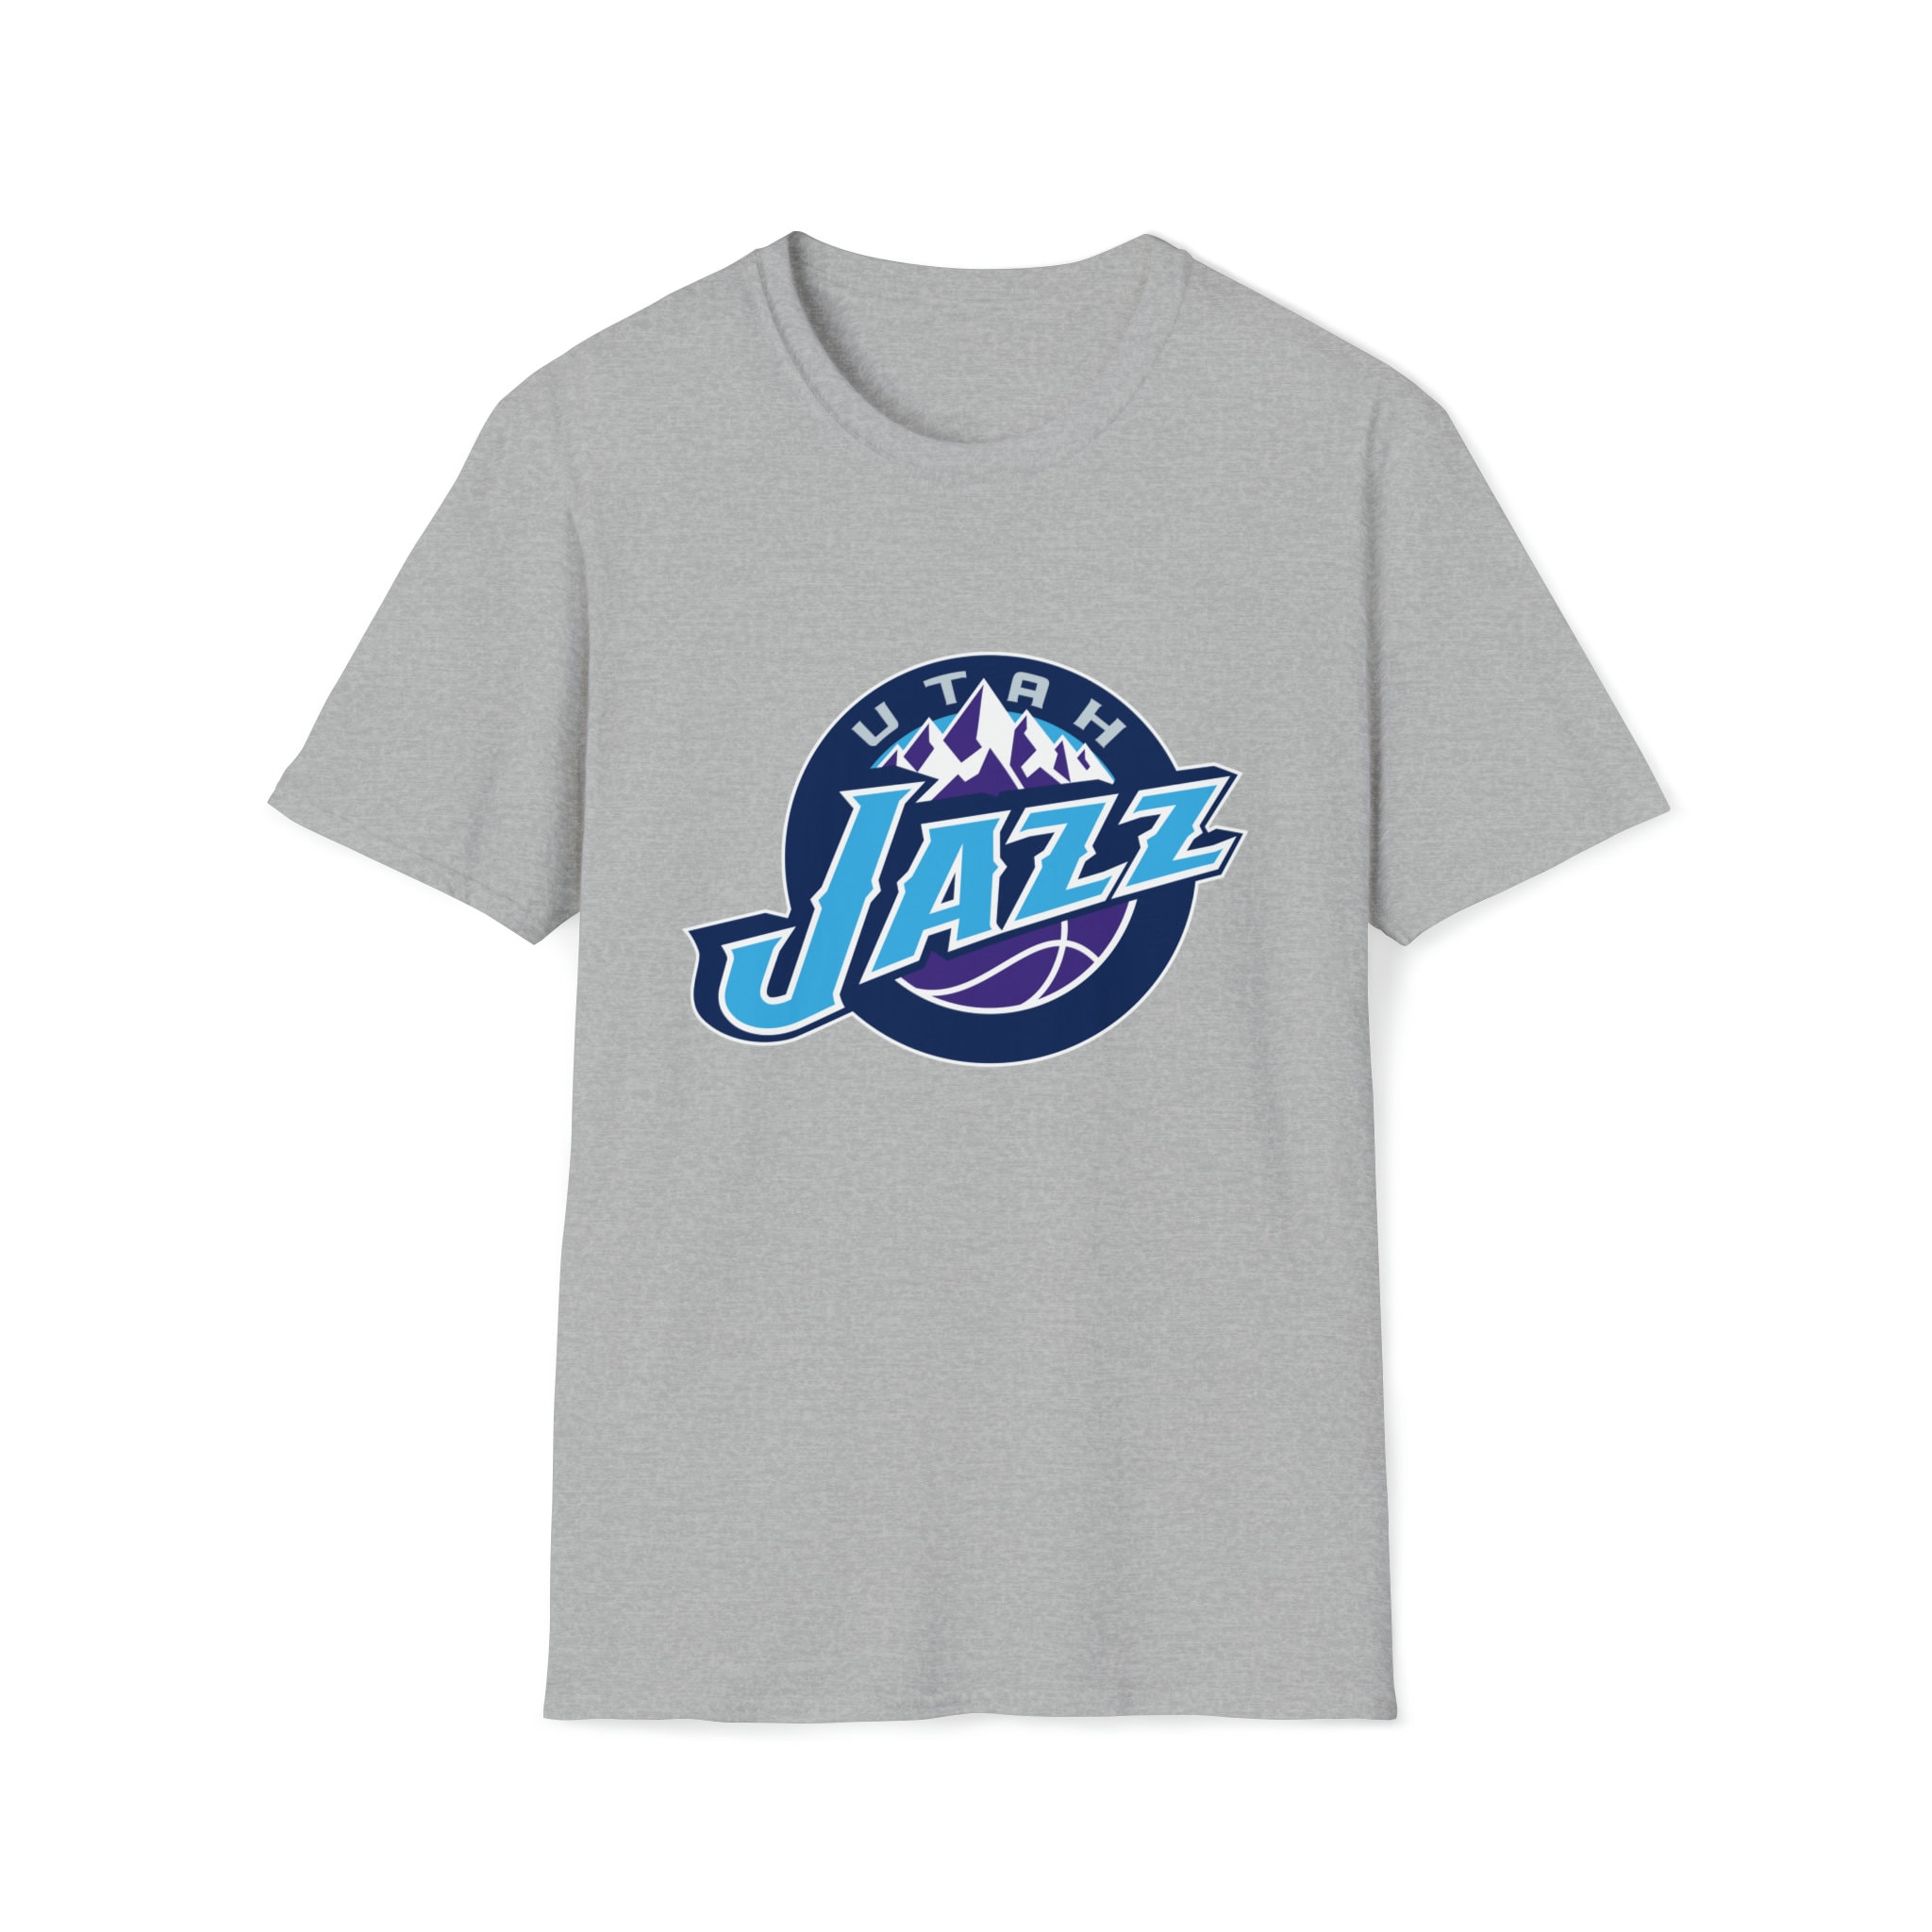 Juantamad John Stockton T-Shirt